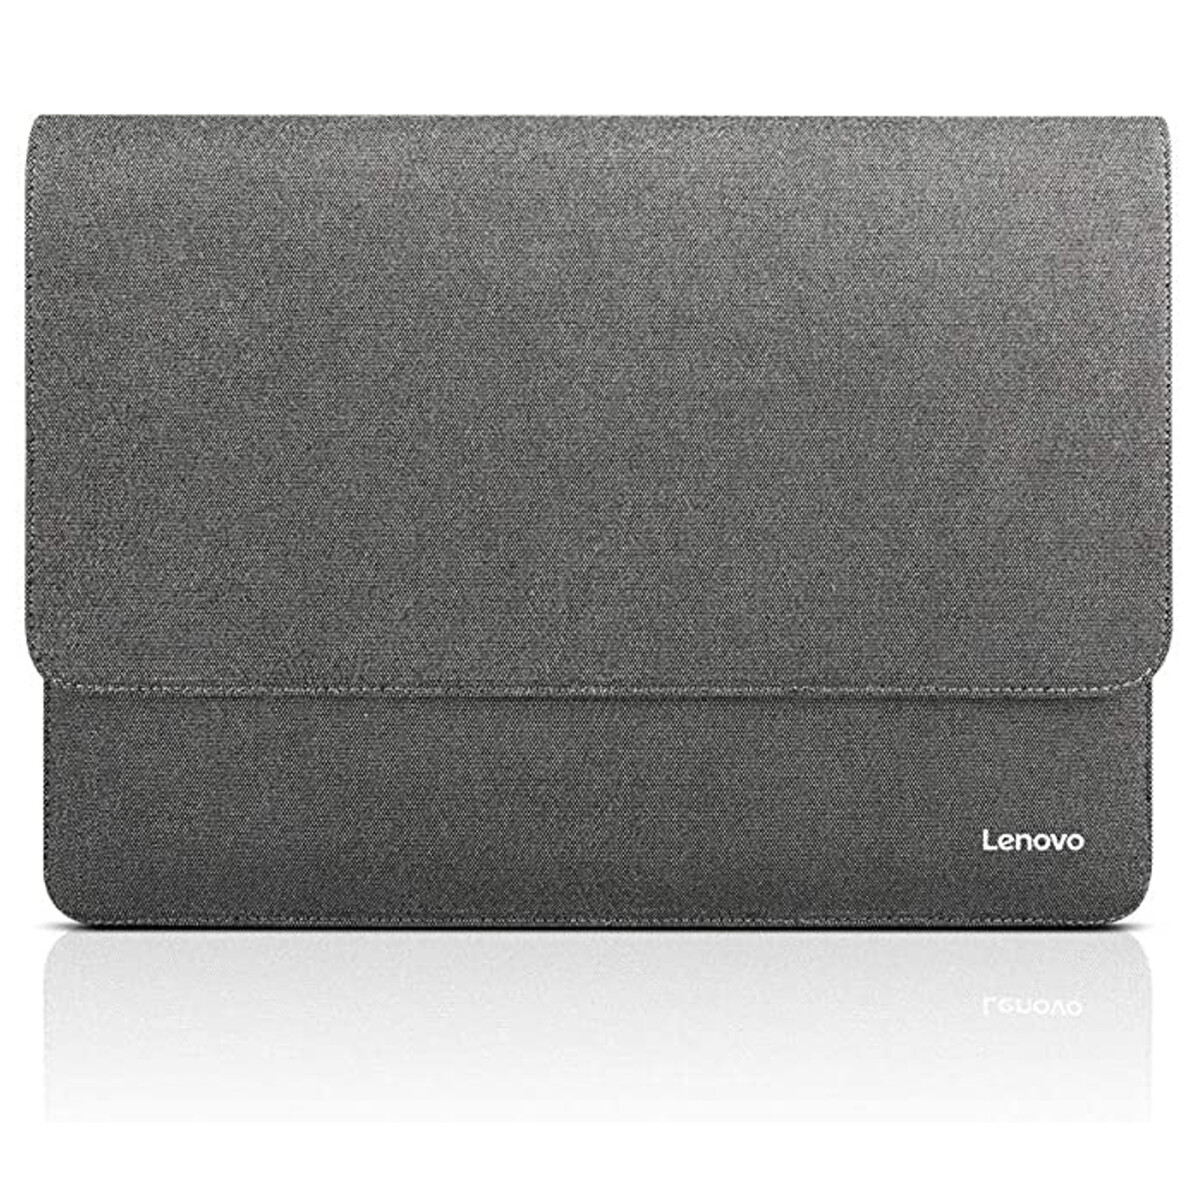 Lenovo - Funda para Notebook de 14". Diseño Ultra Slim. Color Gris. - 001 